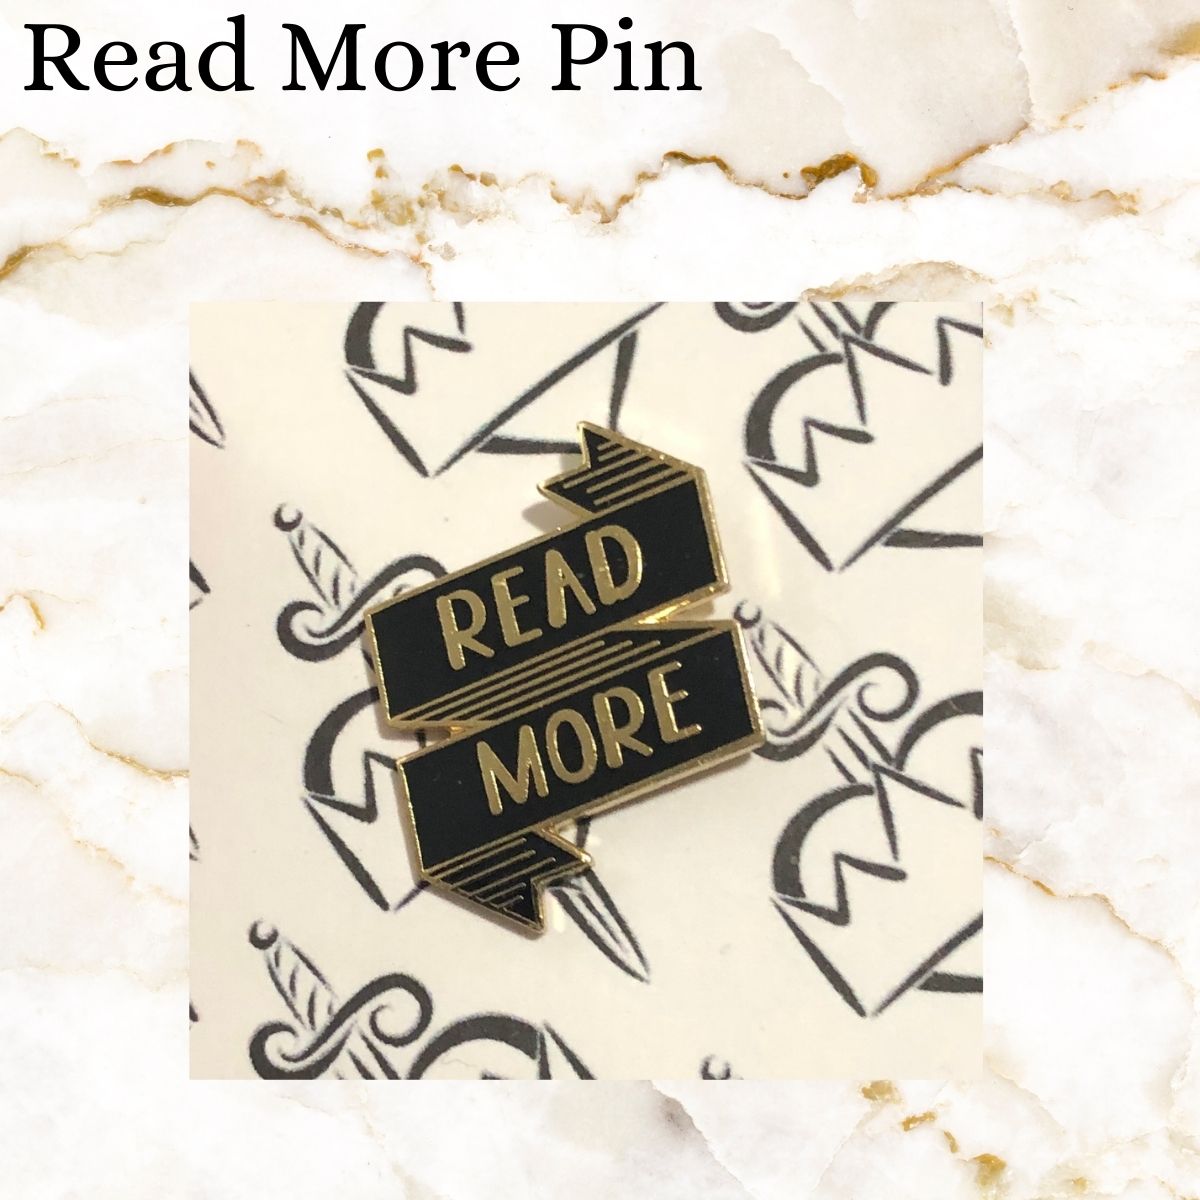 Book pin - black ribbon that just says Read More